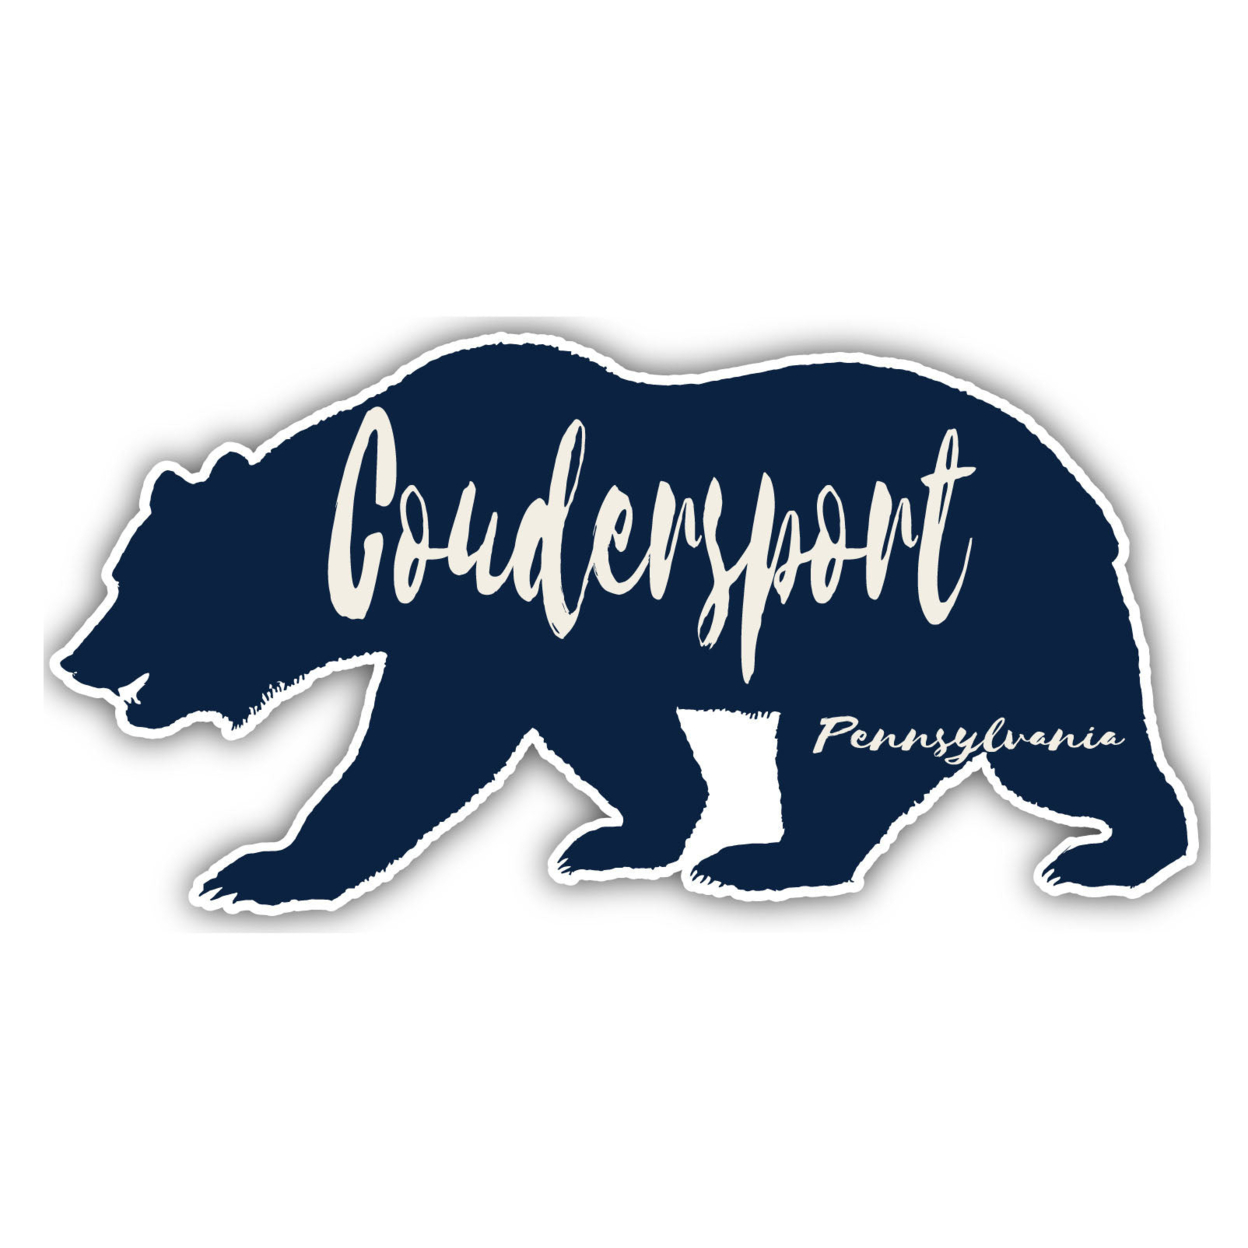 Coudersport Pennsylvania Souvenir Decorative Stickers (Choose Theme And Size) - Single Unit, 4-Inch, Bear